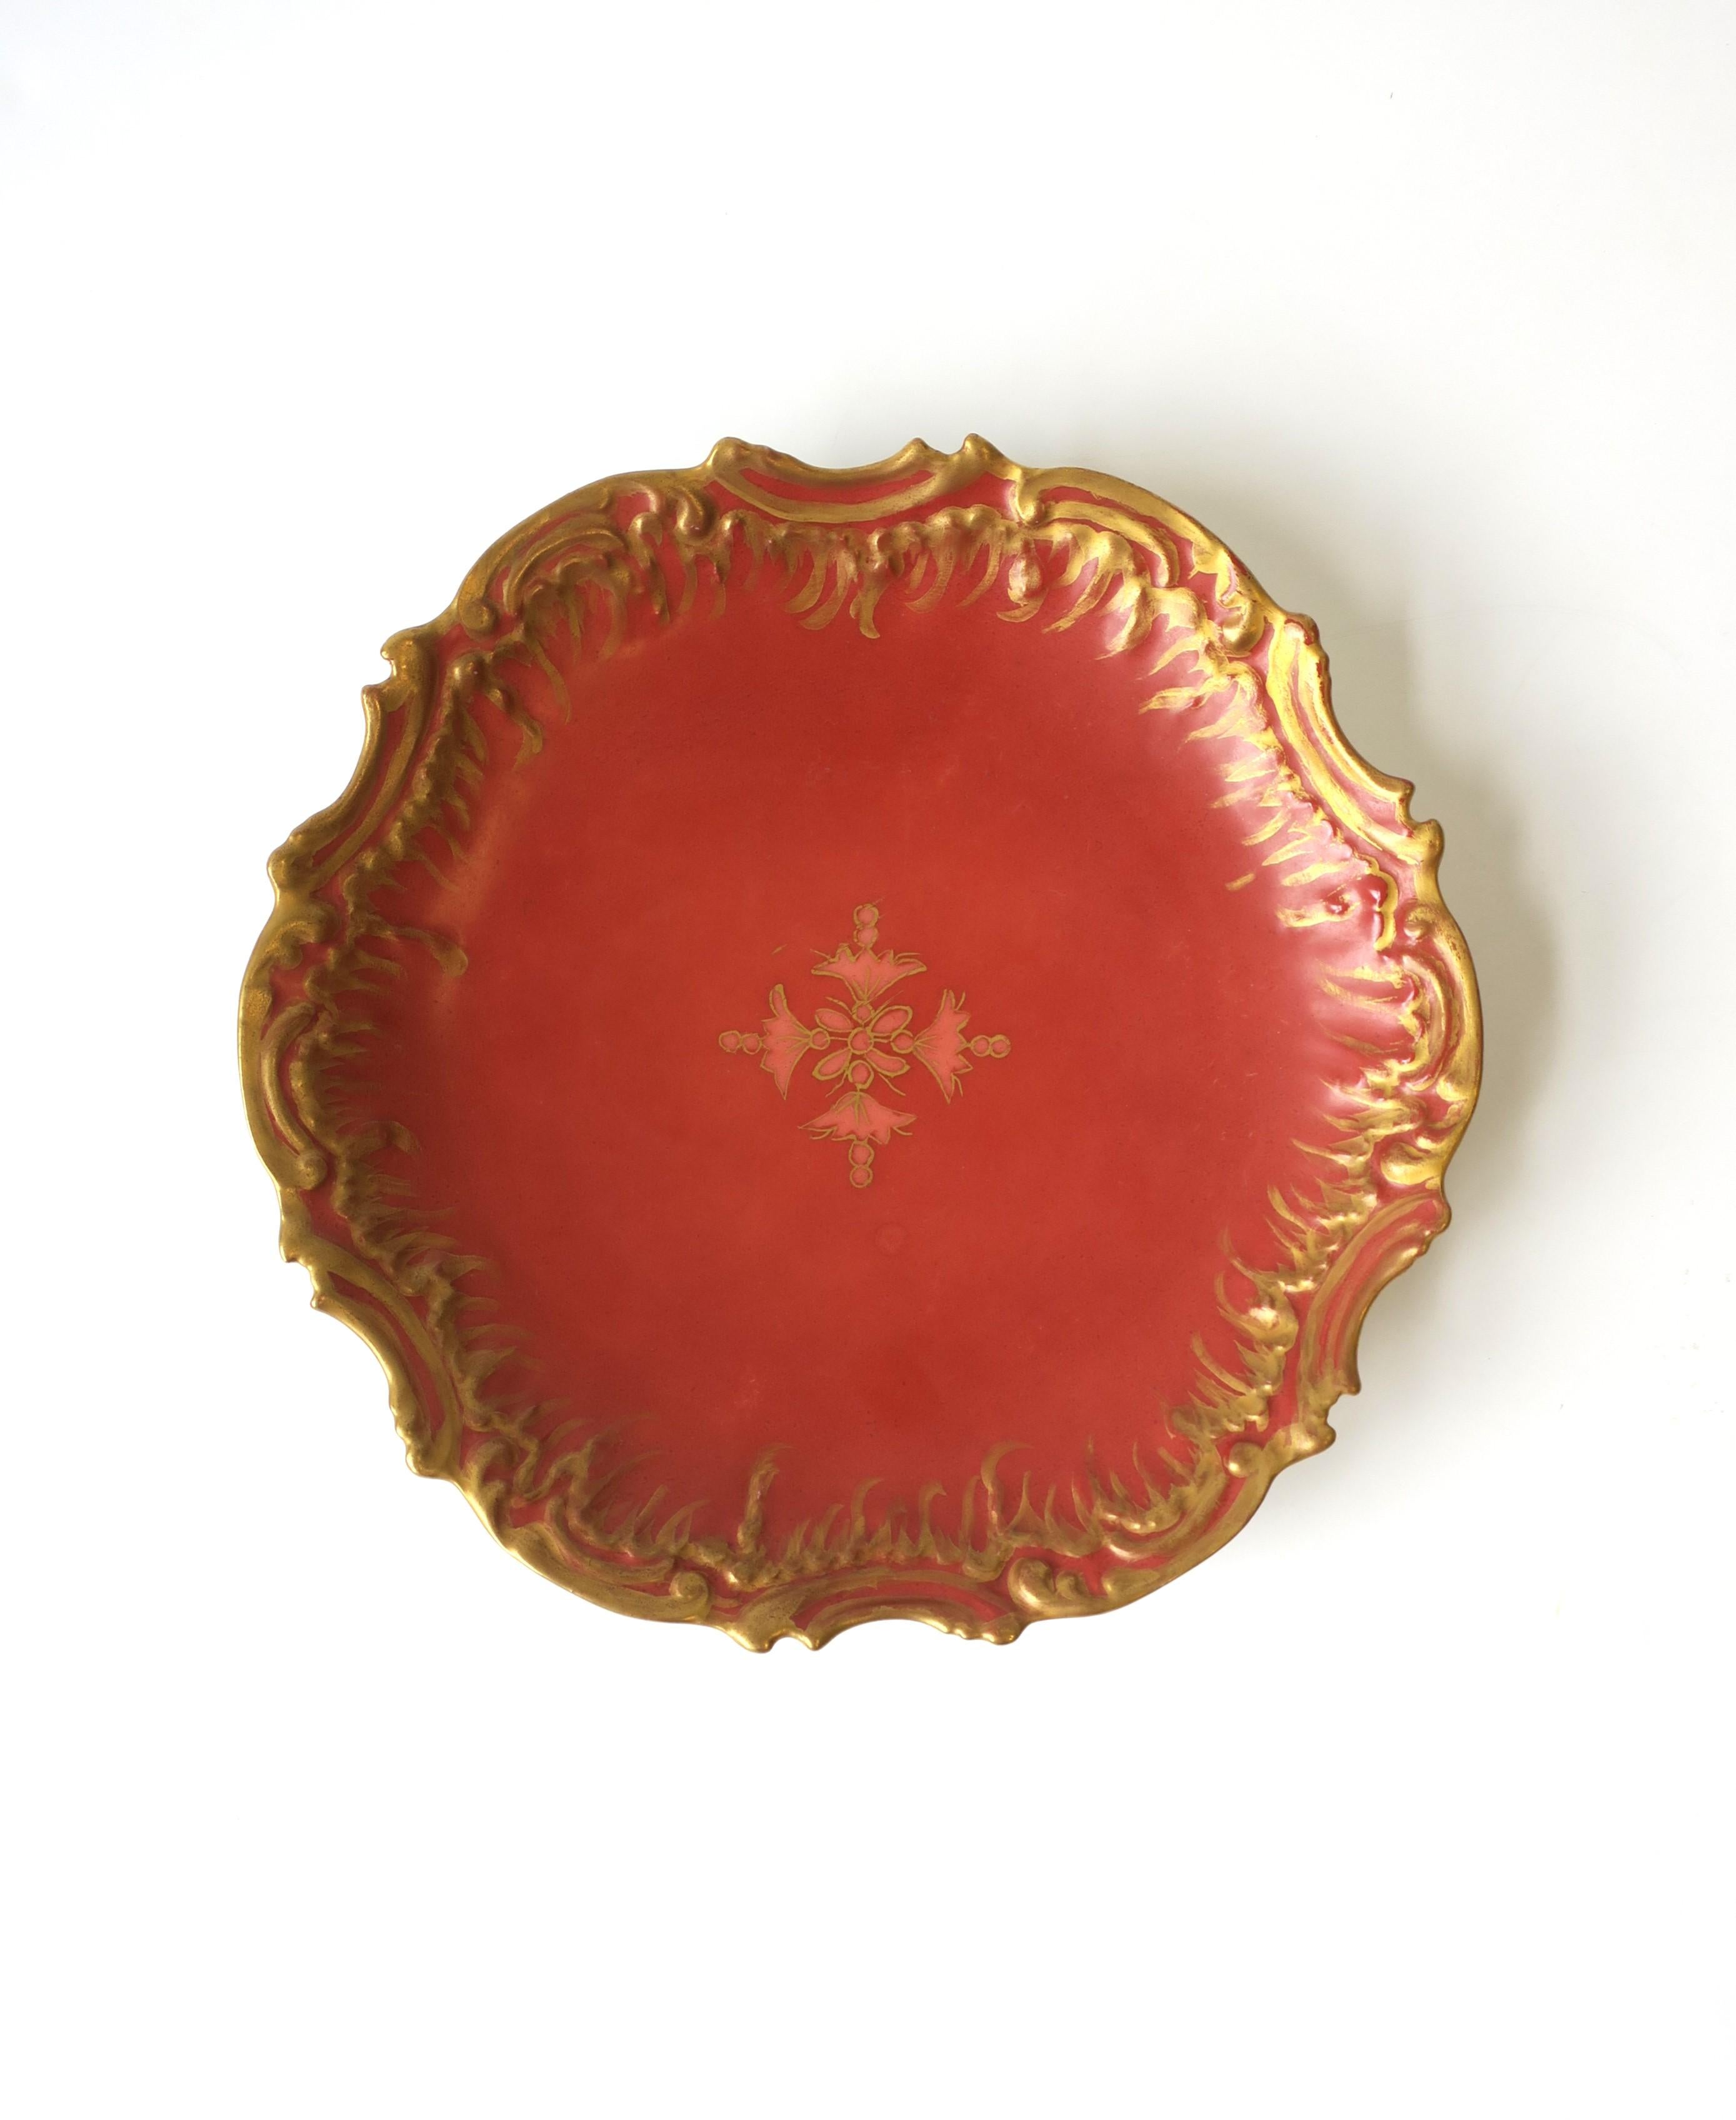 Antique French Limoges Porcelain Plates, Pair For Sale 1